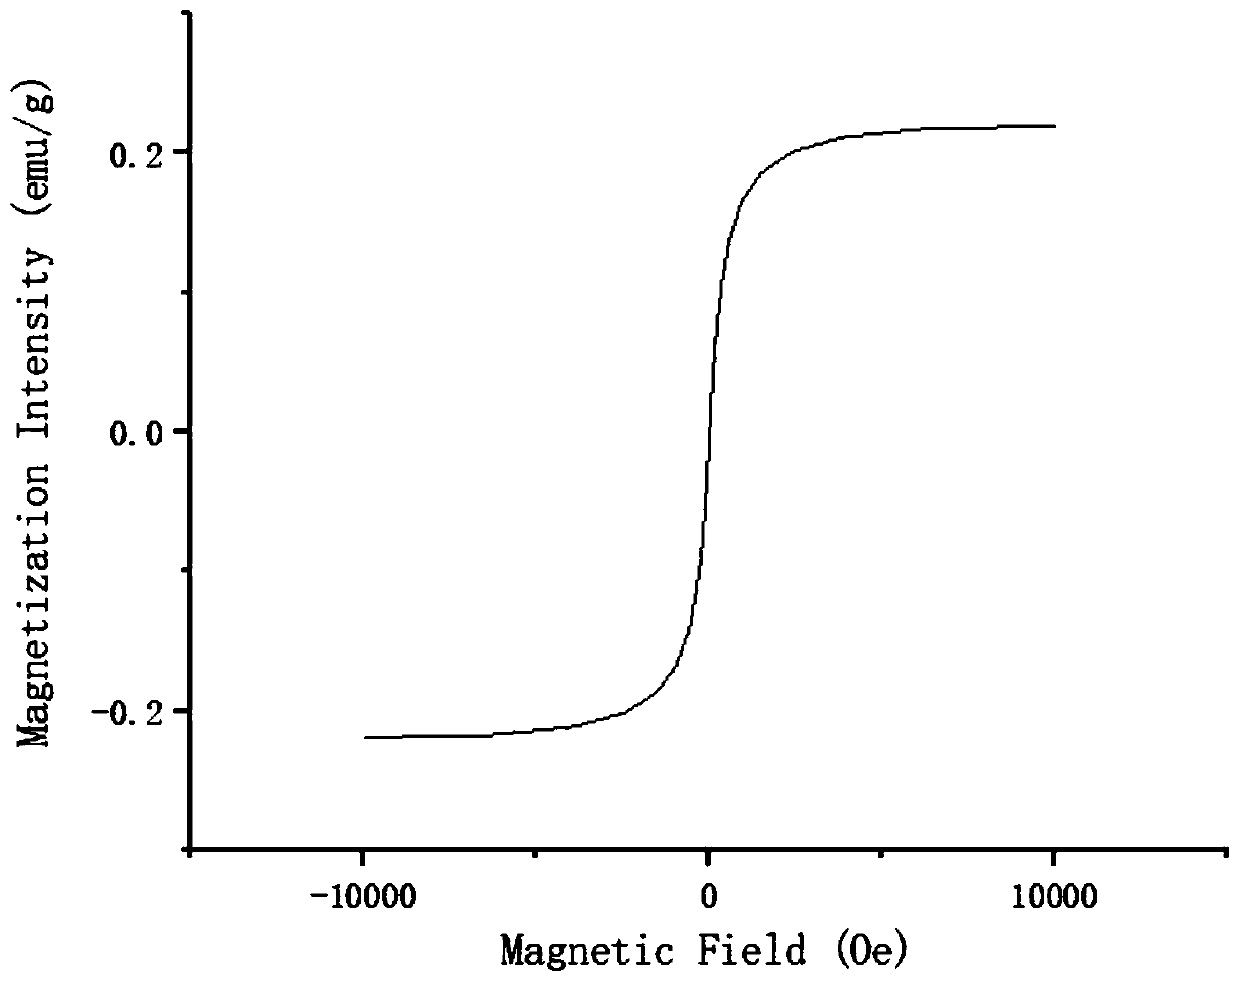 Magnetic moment correction method